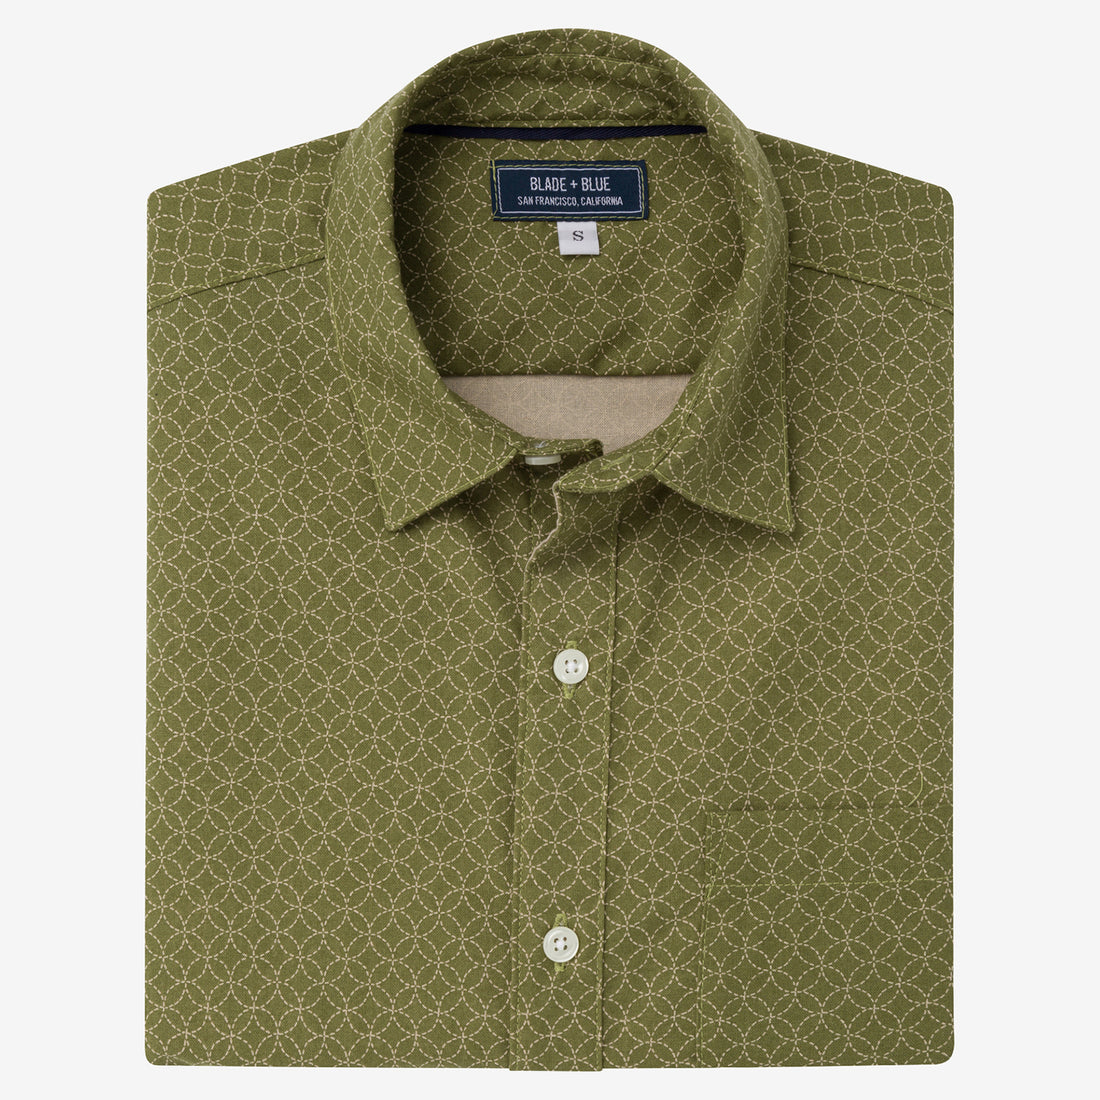 GARRISON Short Sleeve Shirt in Light Olive Green Japanese Floral Print